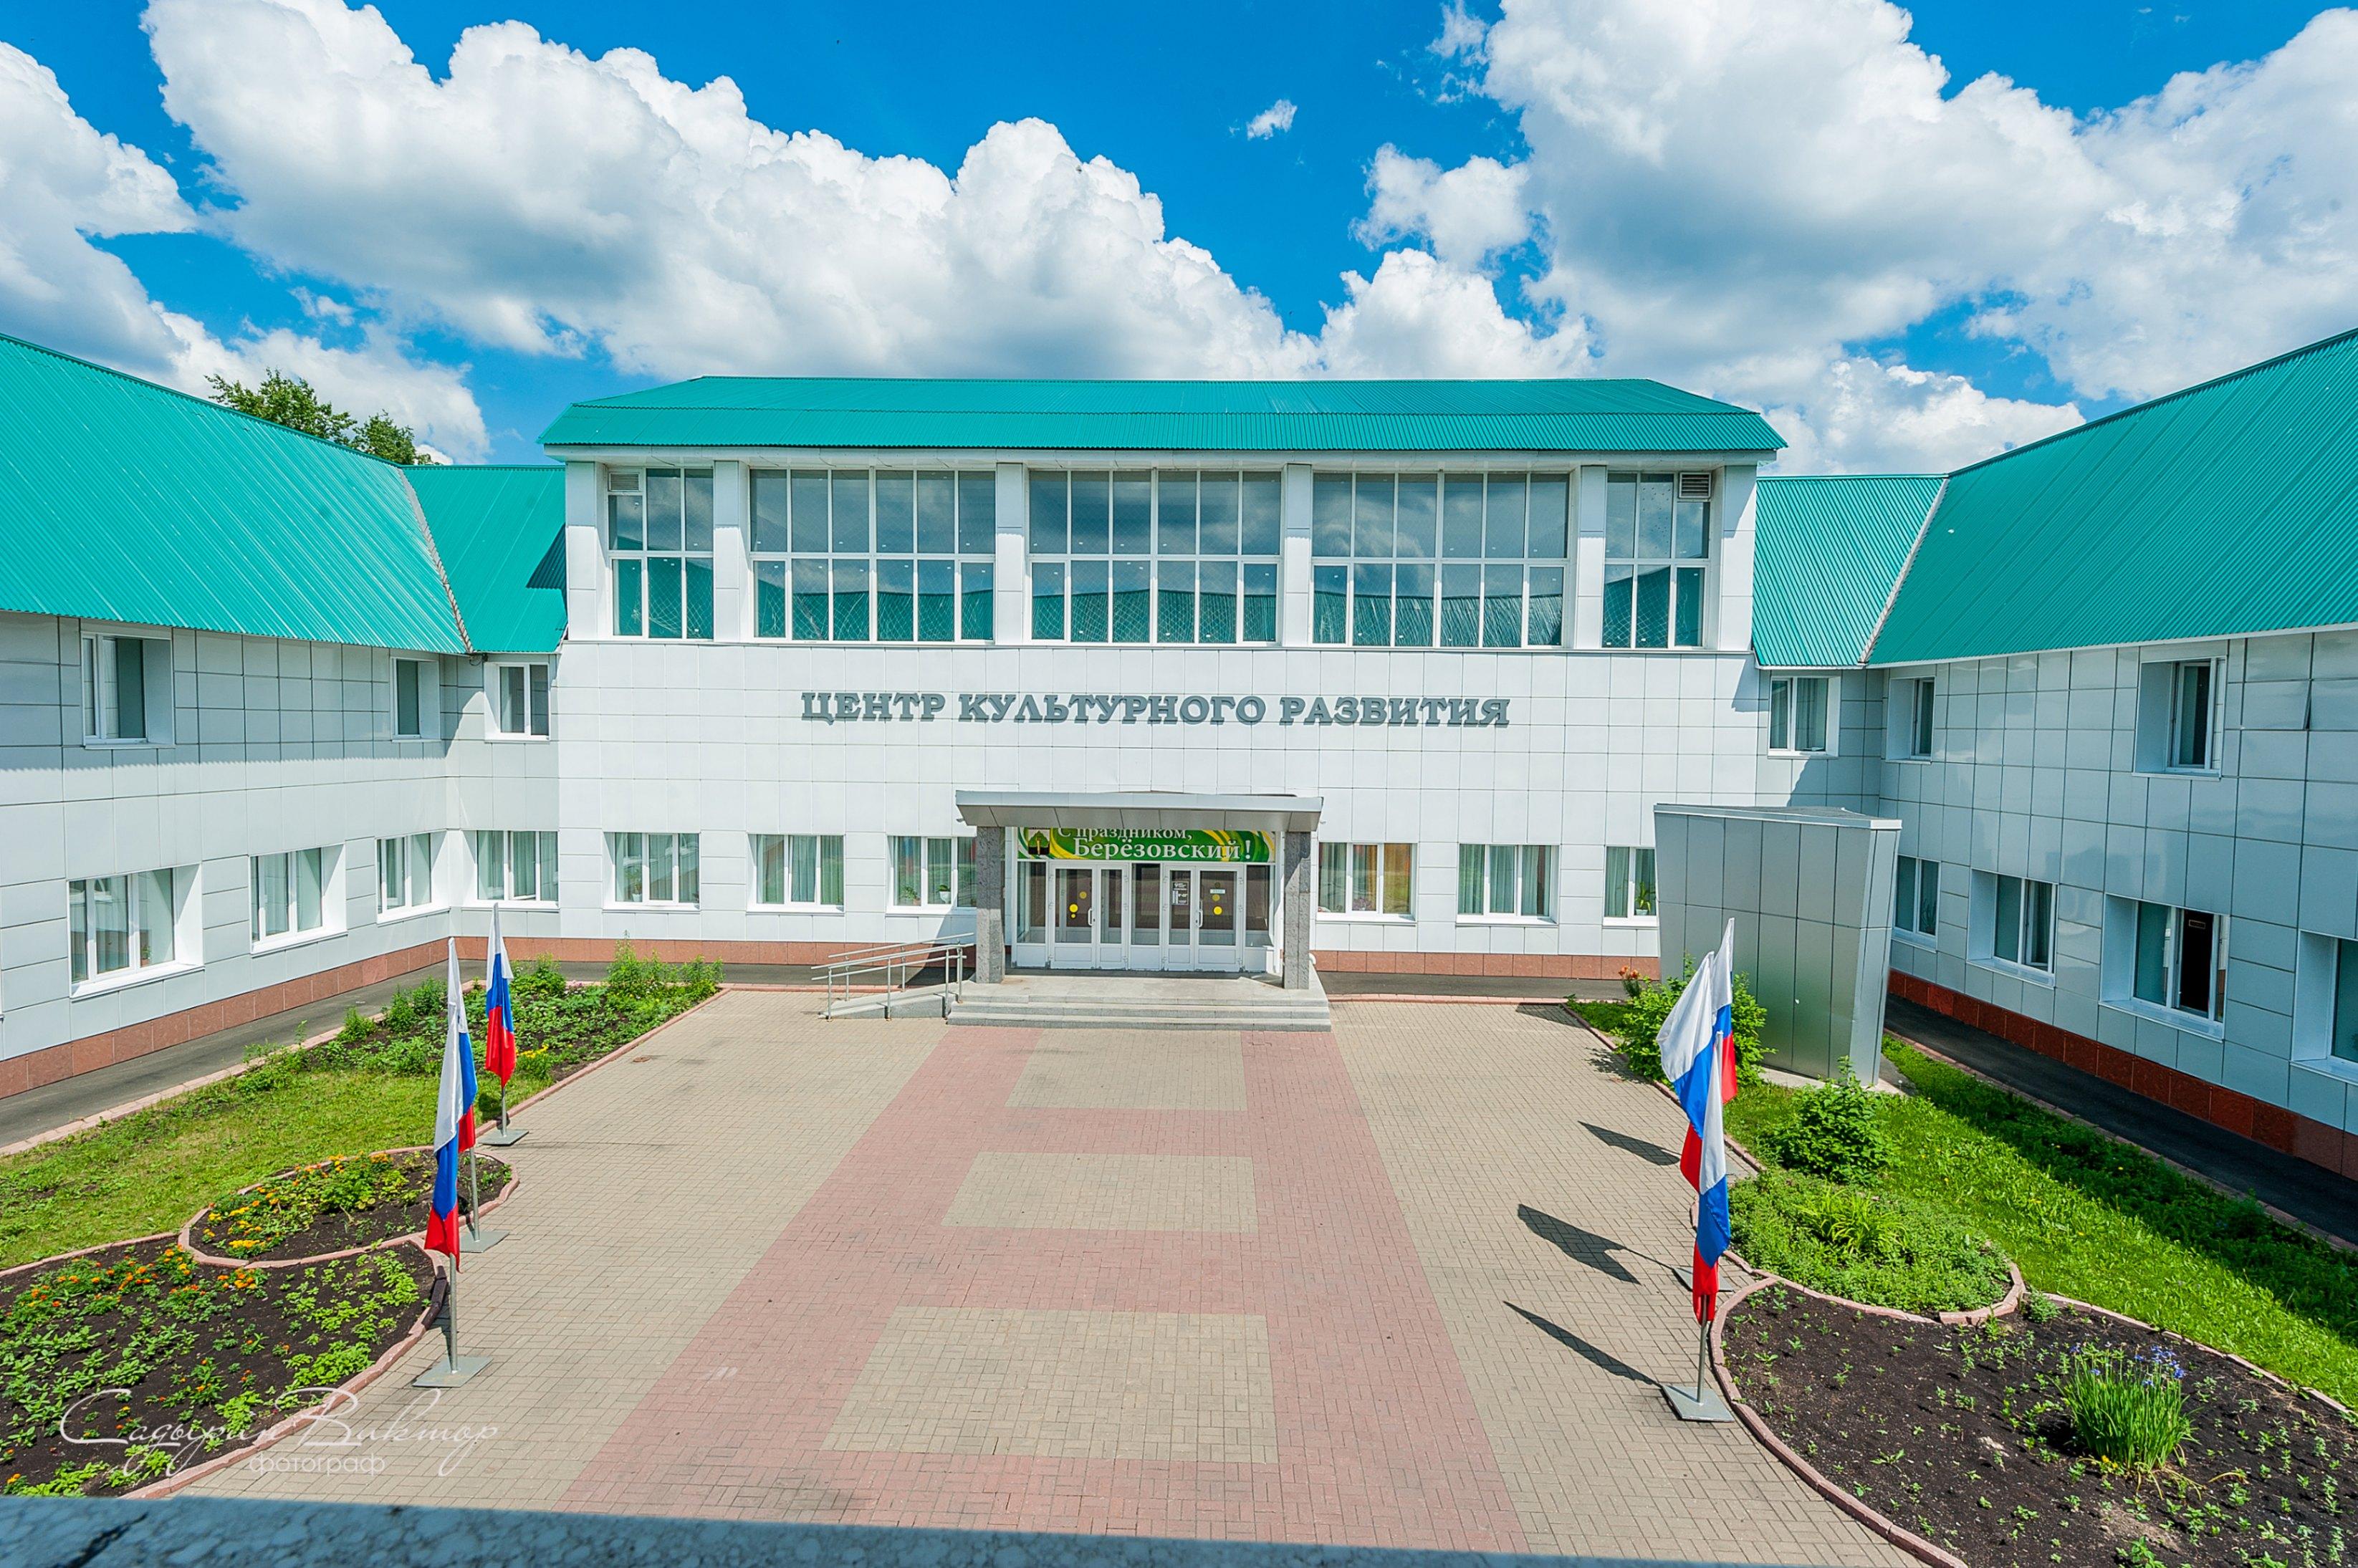 Центр культурного развития г. Березовский